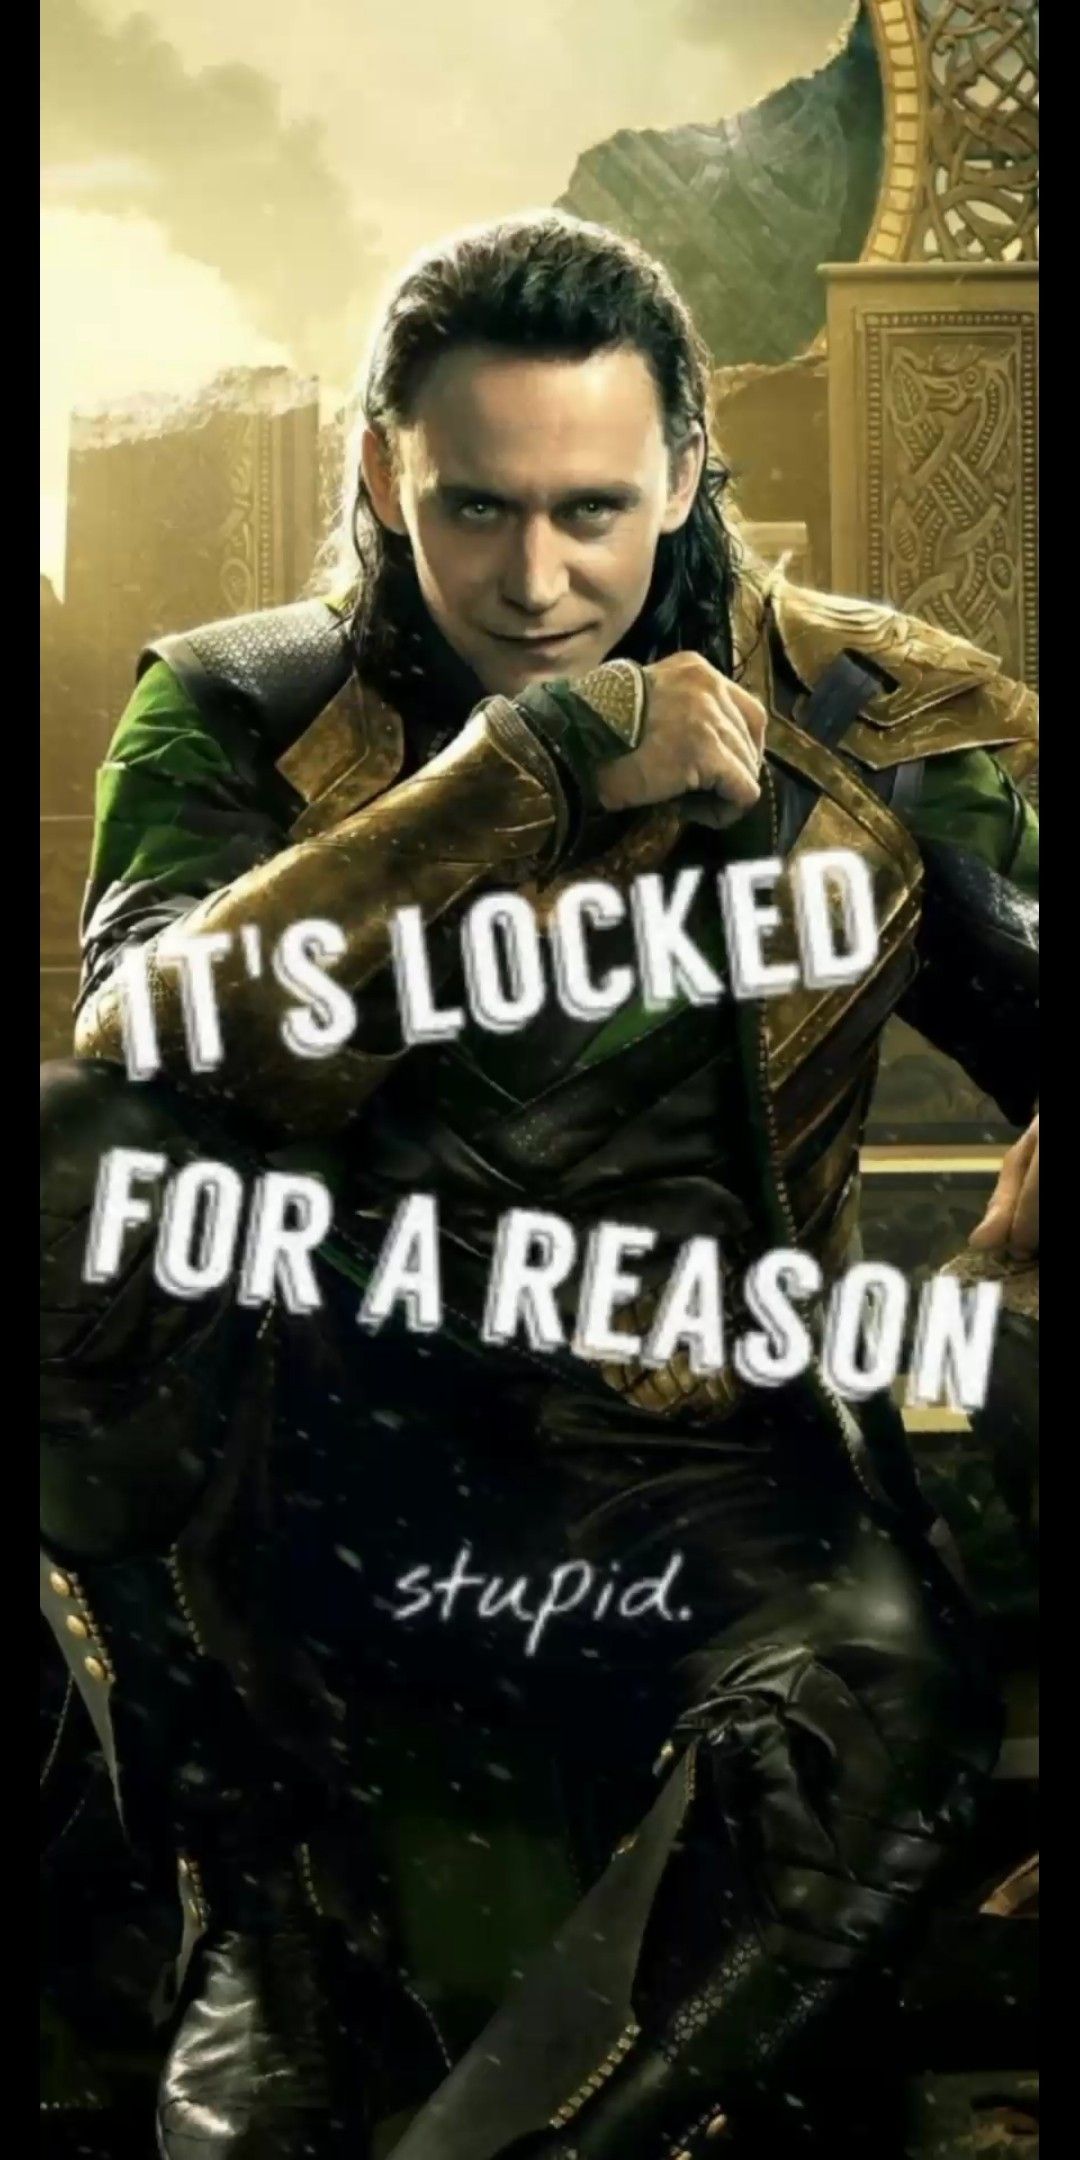 Loki being locked for unknown reason · Issue # · grafana/loki · GitHub